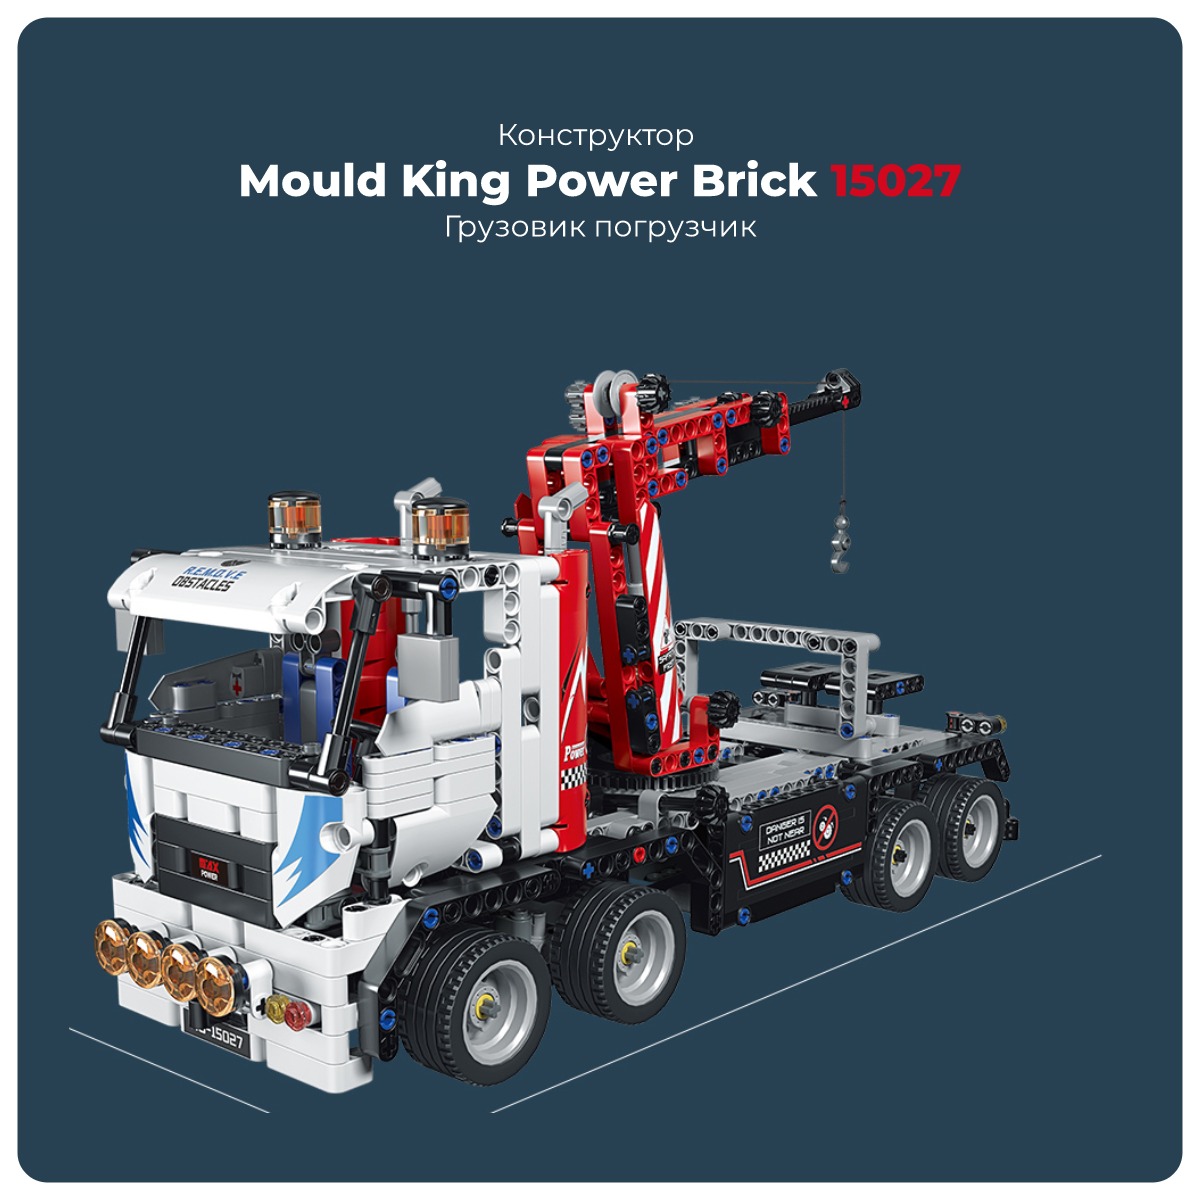 Mould-King-Power-Brick-15027-01